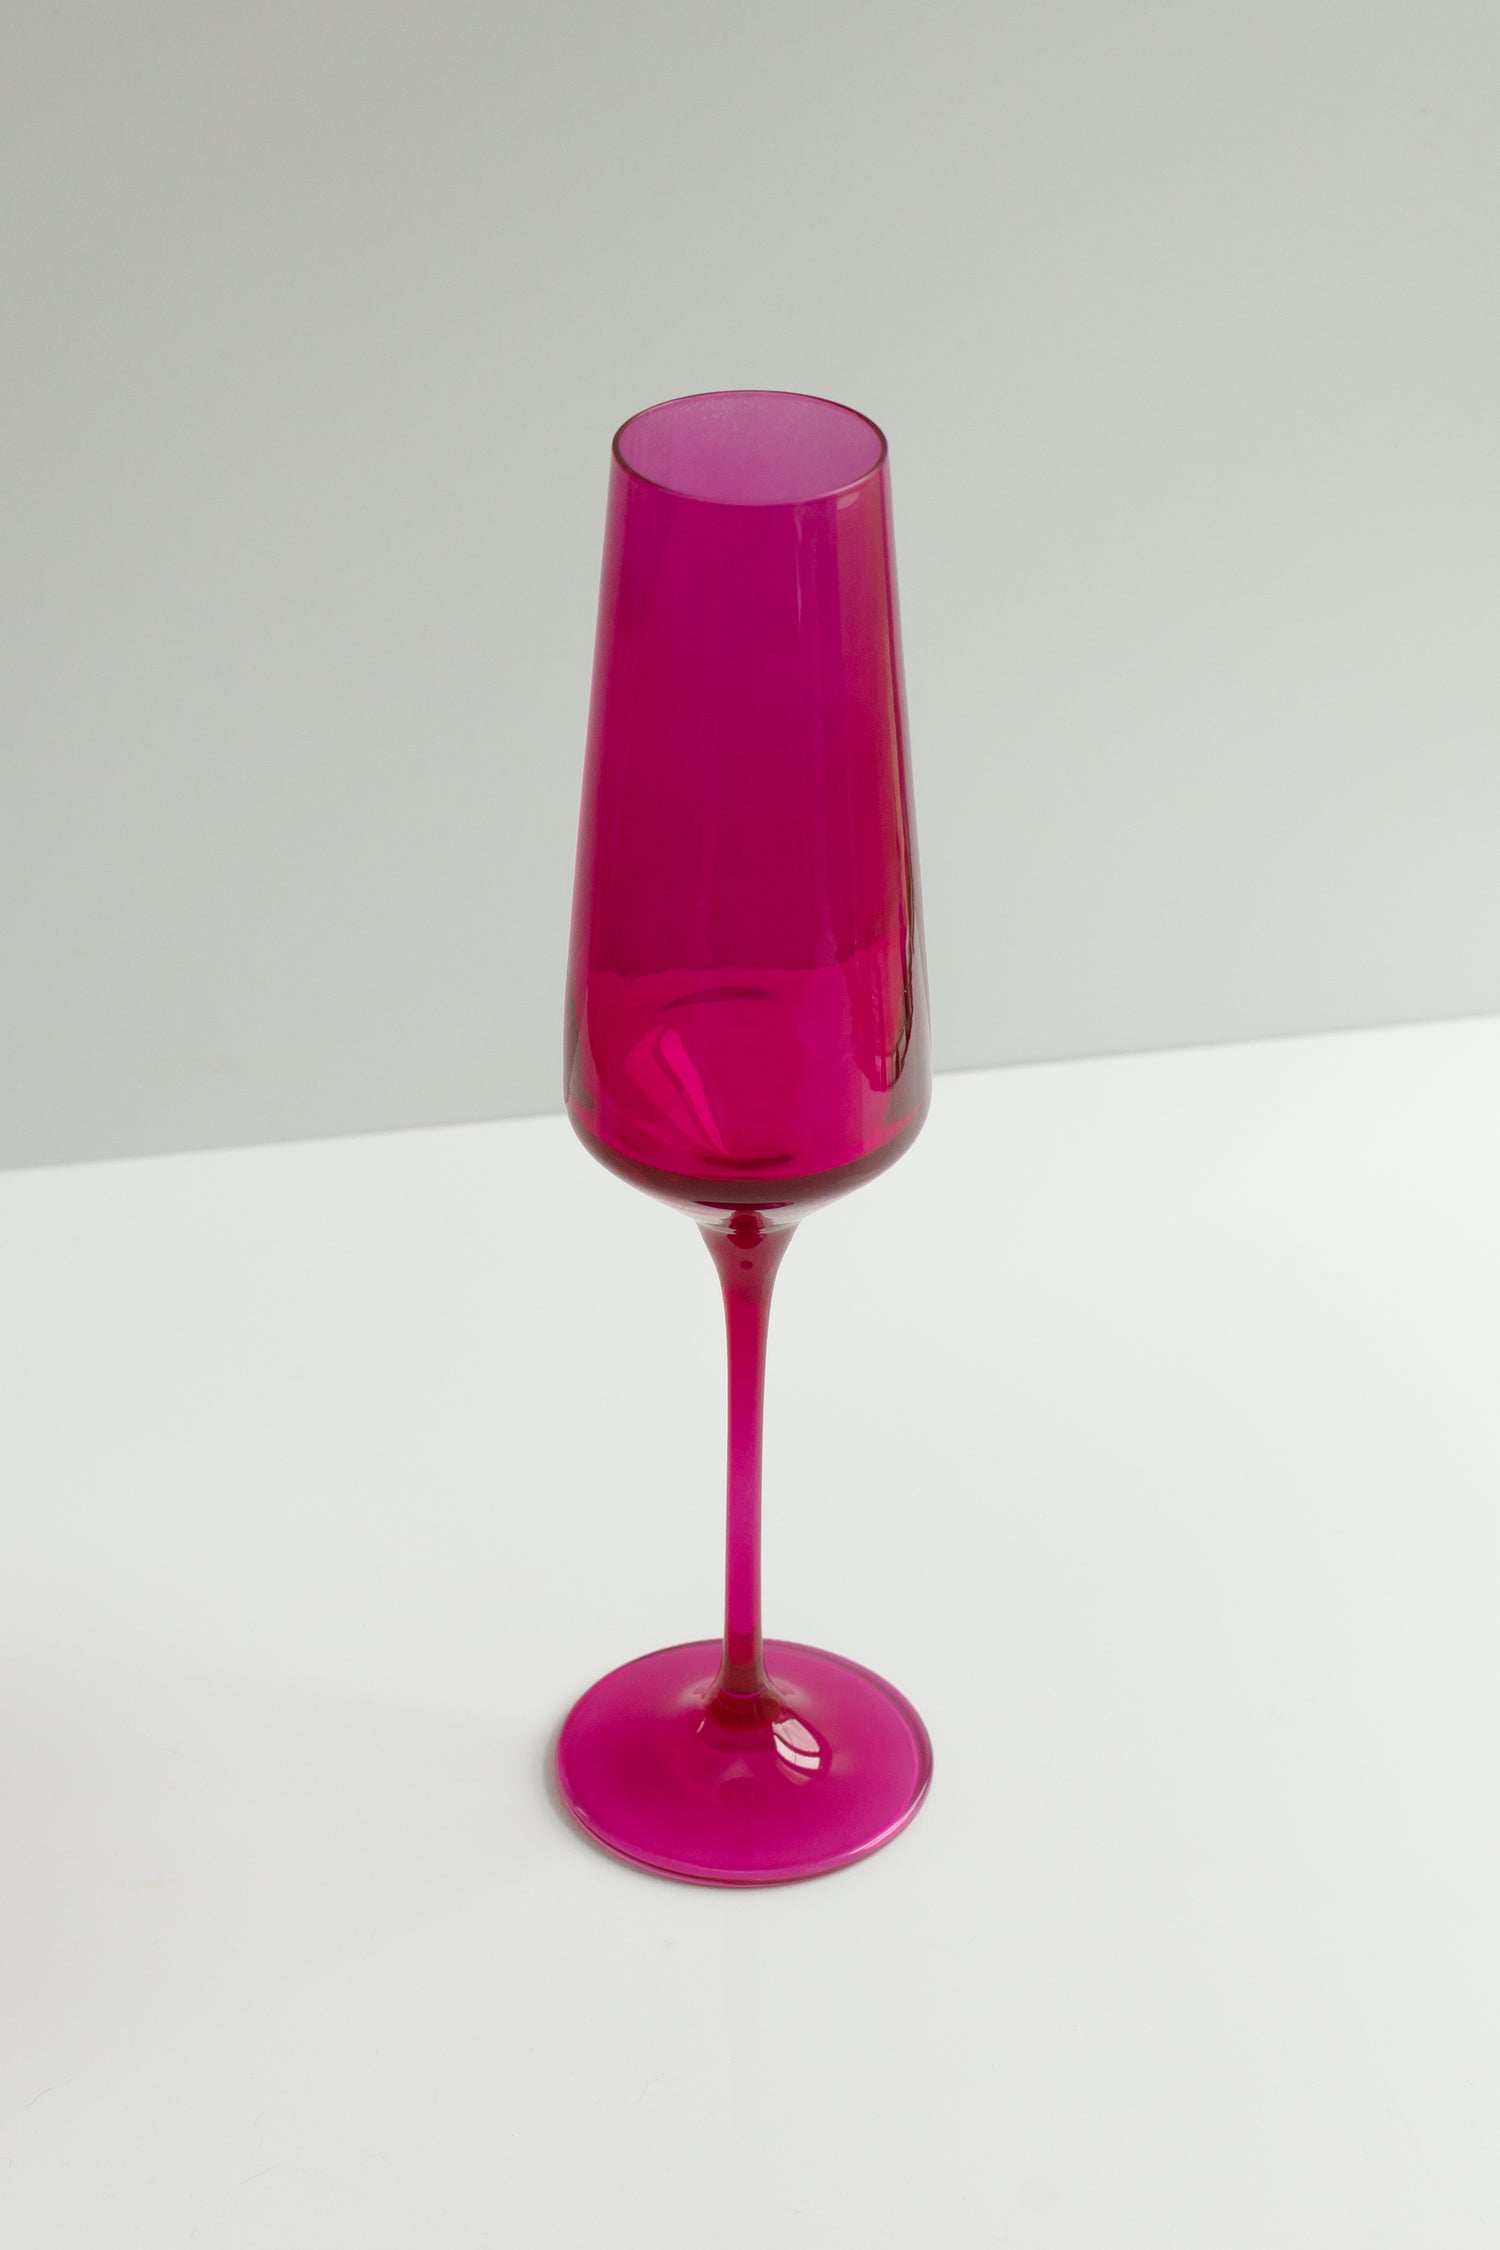 Estelle Colored Champagne Flute - Set of 6 {Viva Magenta (Our Fuchsia)}